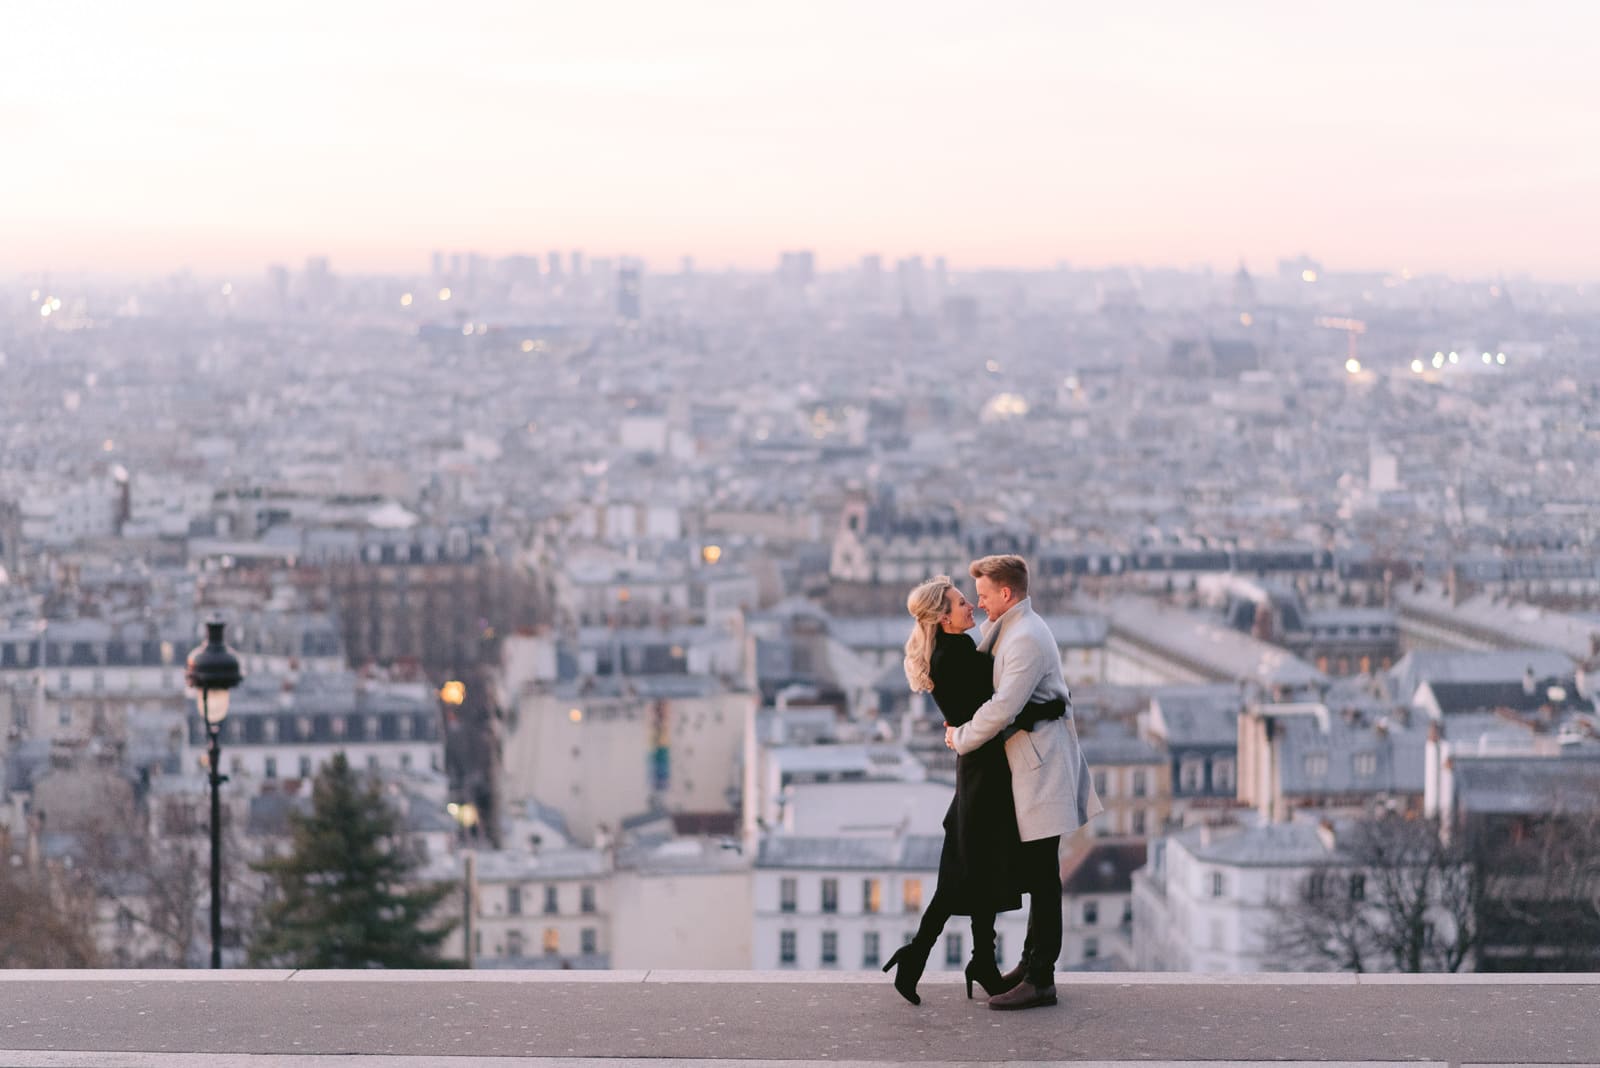 Paris proposal photographer - Engagement photos at Montmartre overlooking the city of Paris